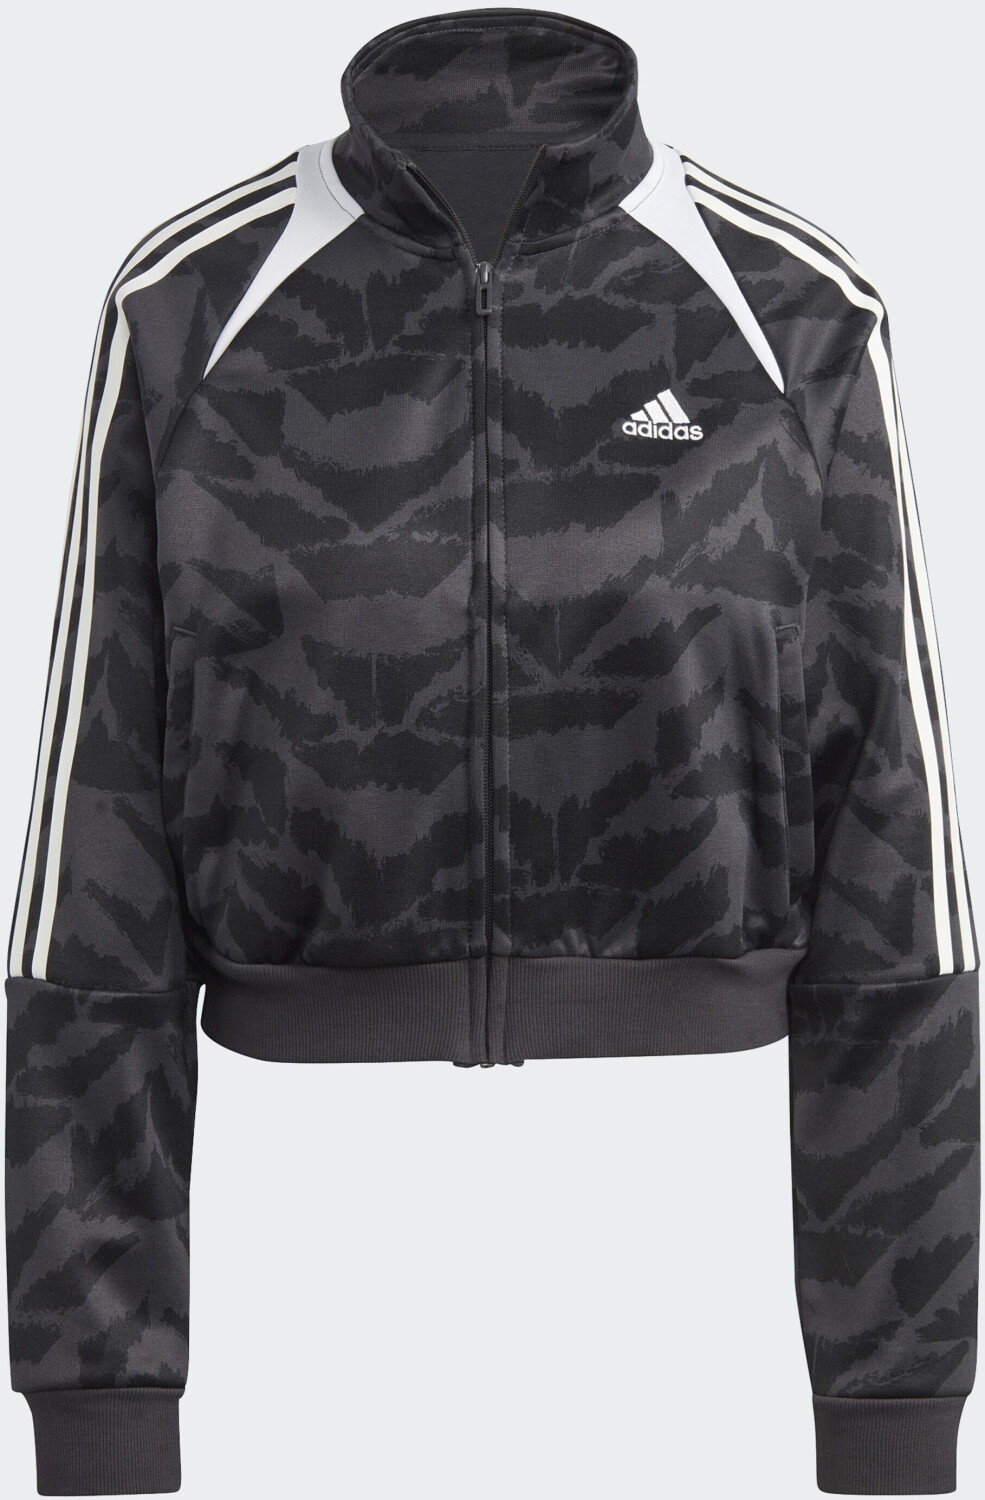 Adidas Tiro Suit Up Lifestyle bei carbon/black/white/white € | Preisvergleich Trainingsjacke 45,99 ab